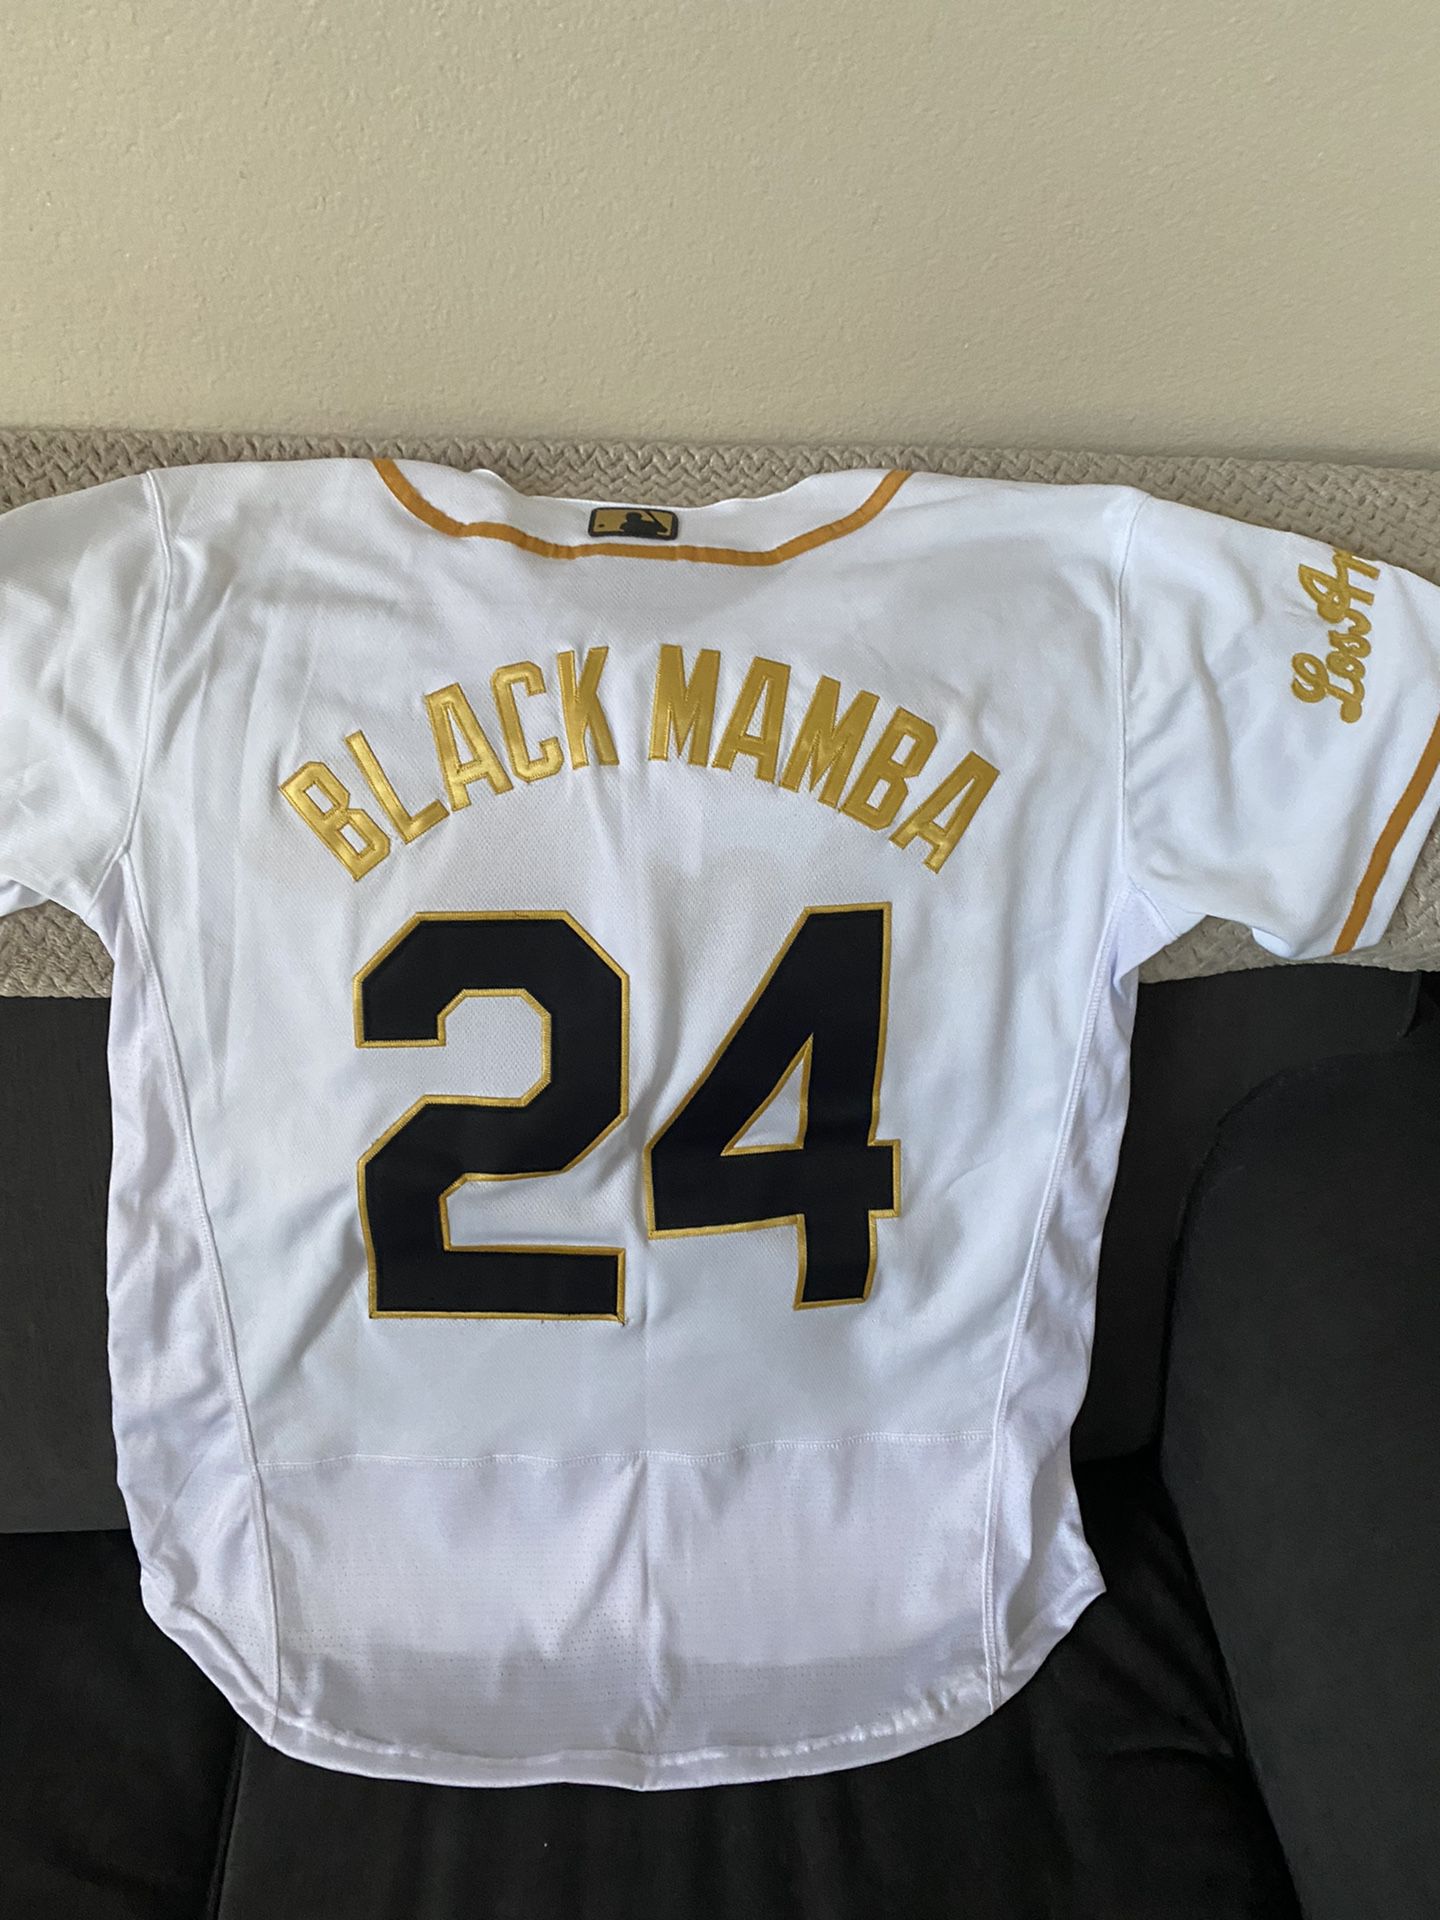 L.A. Dodgers #24 Black Mamba Jersey Size 44-Large